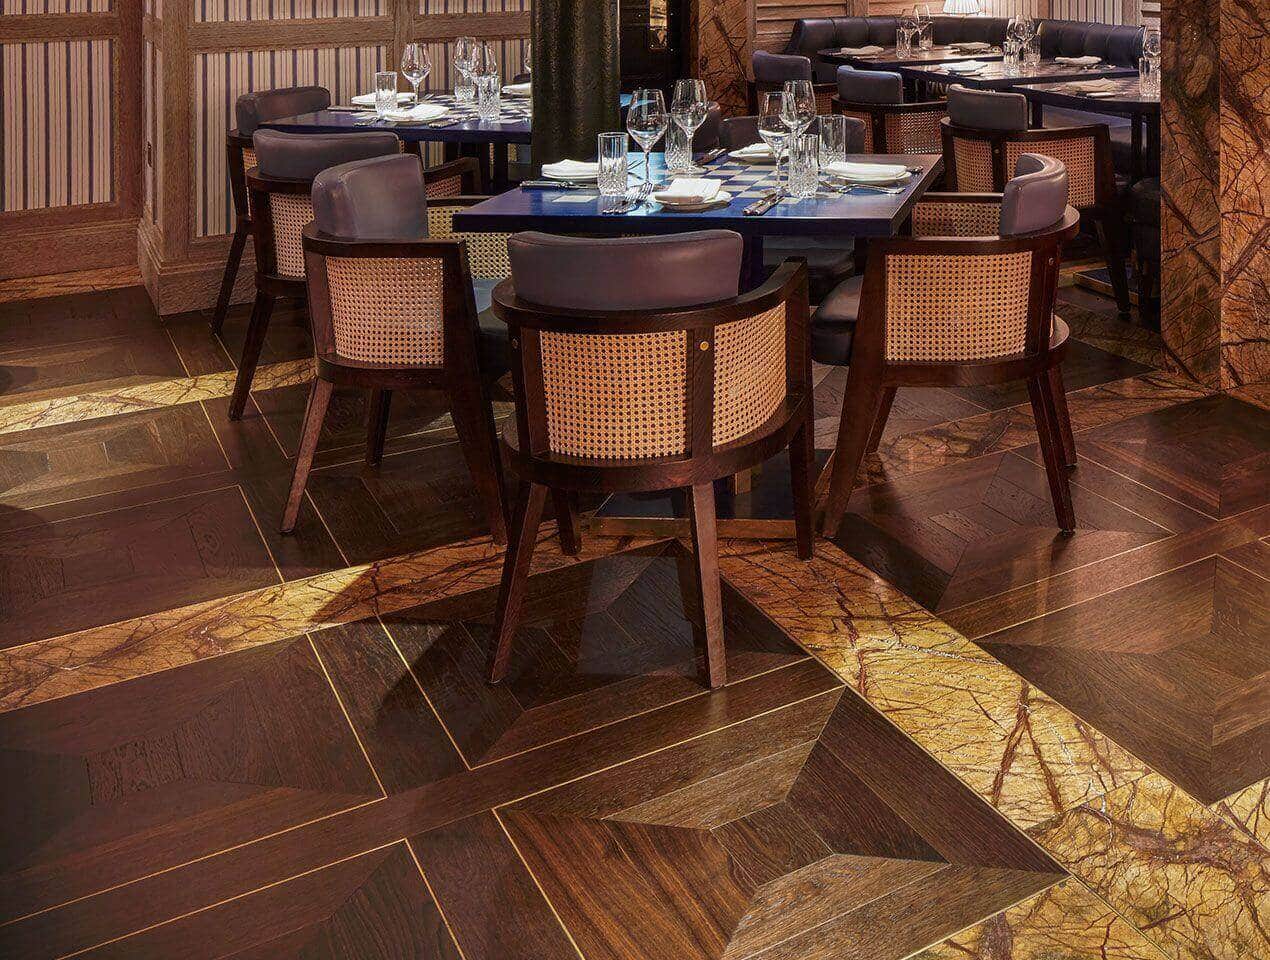 Restaurant flooring